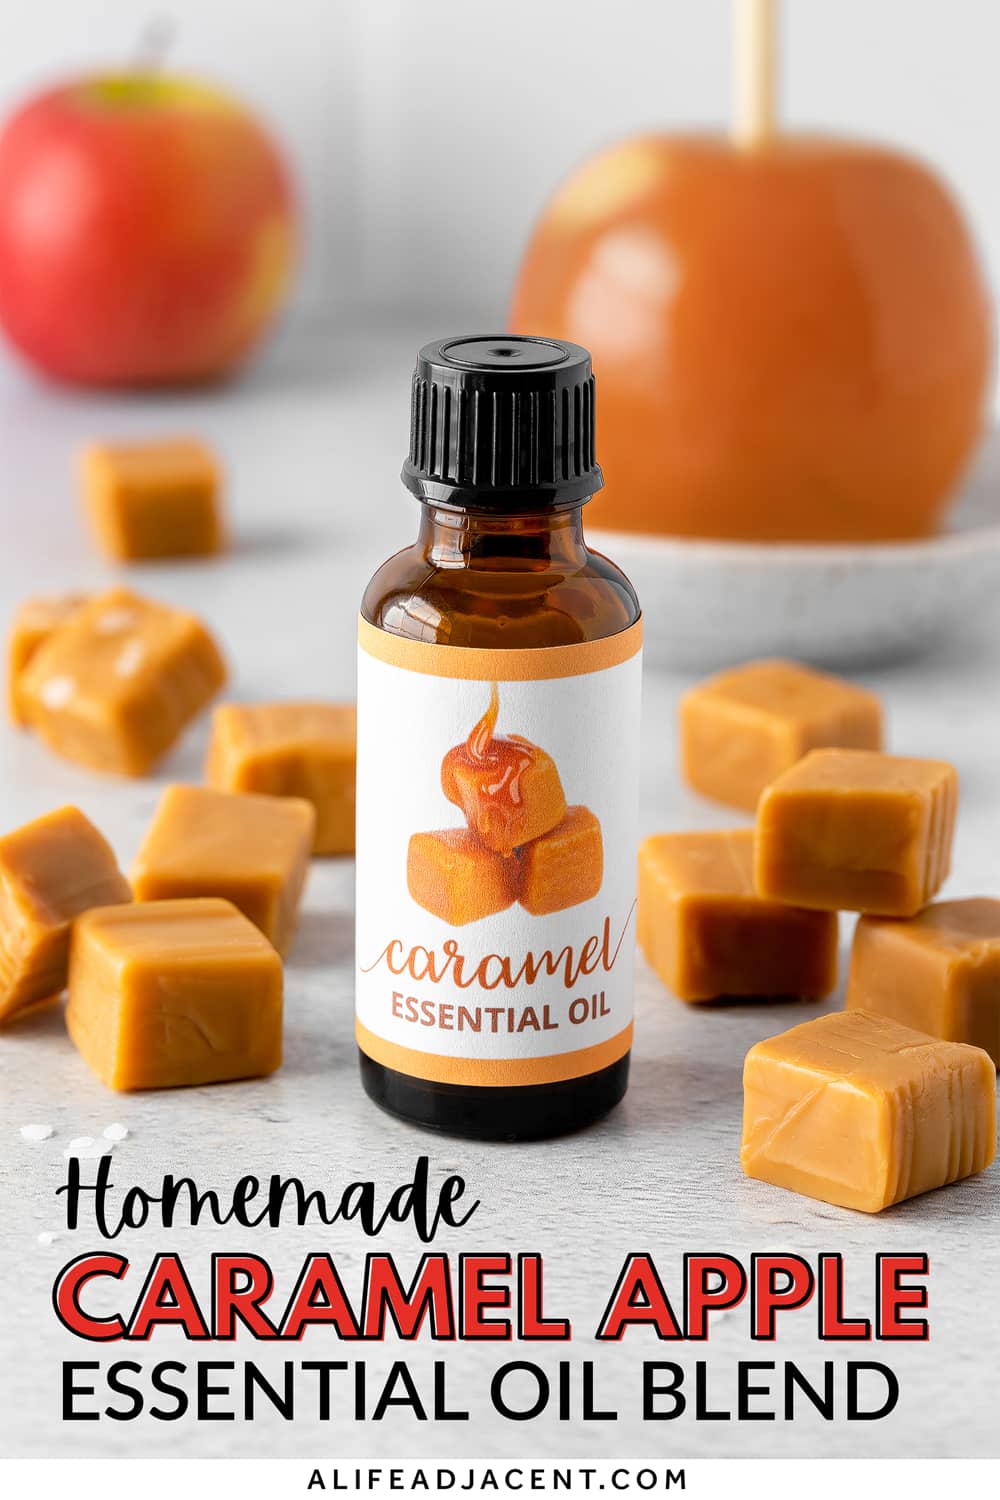 Caramel Apple Essential Oil Blend